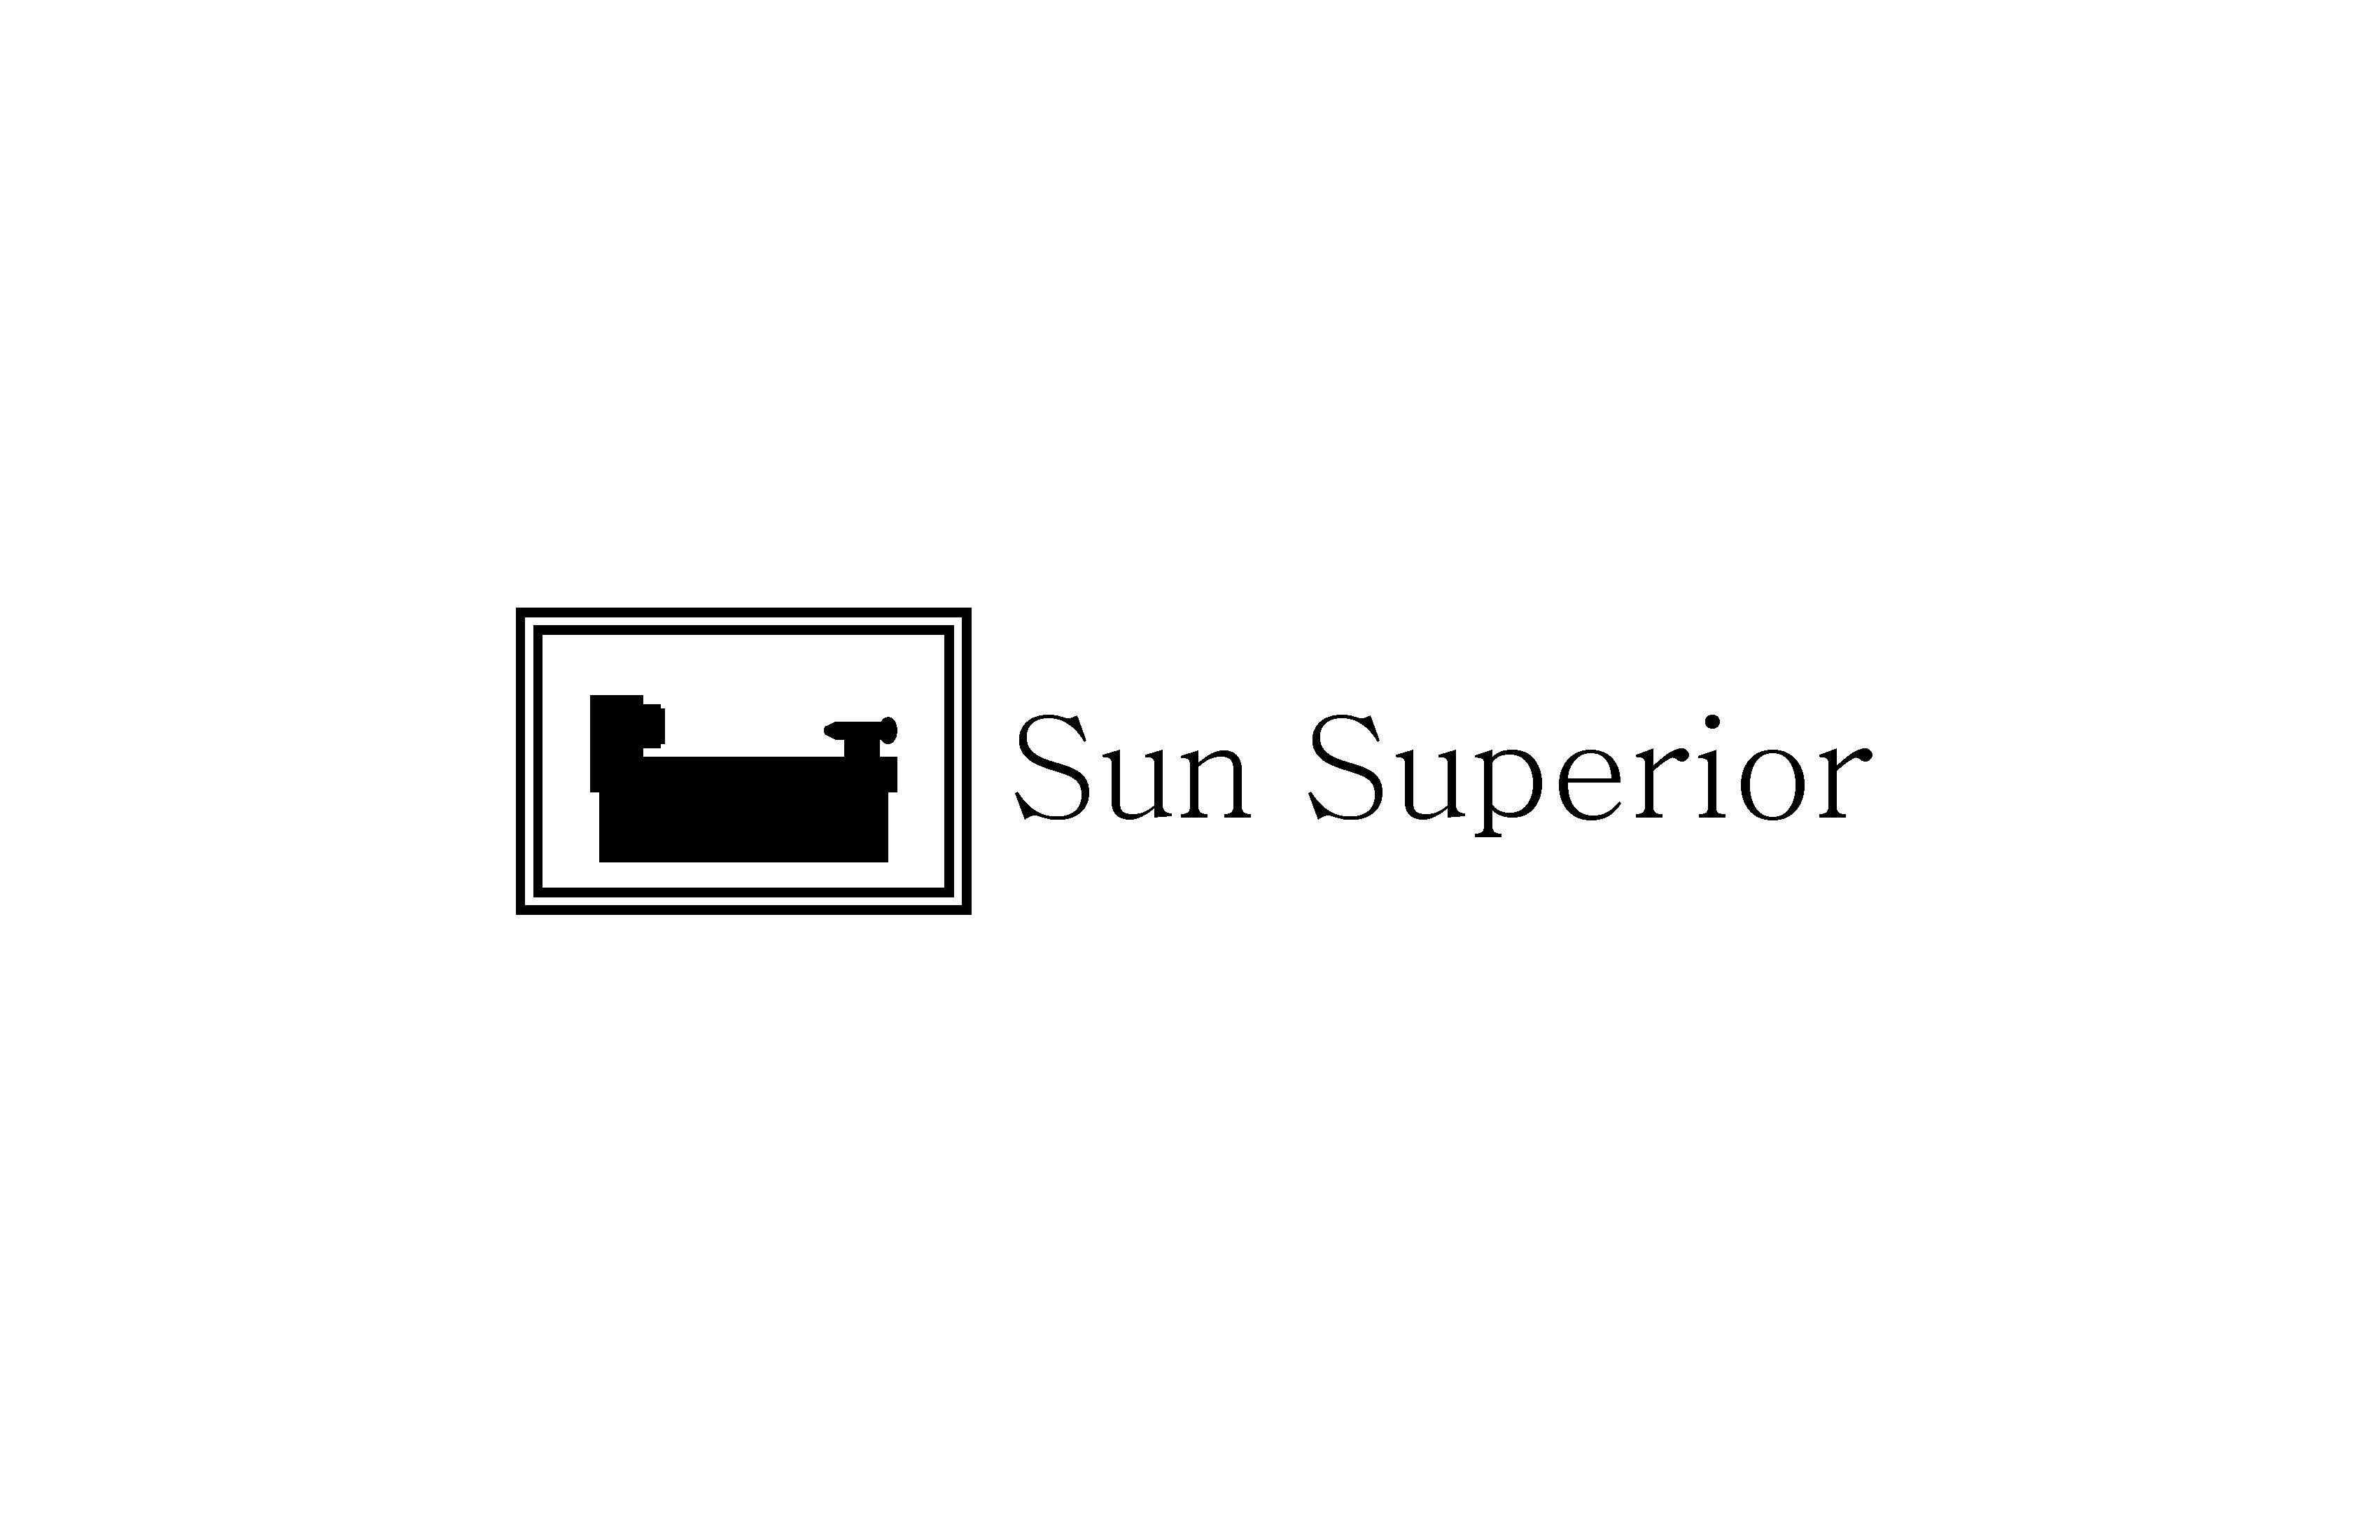 Sun Superior – LOGO